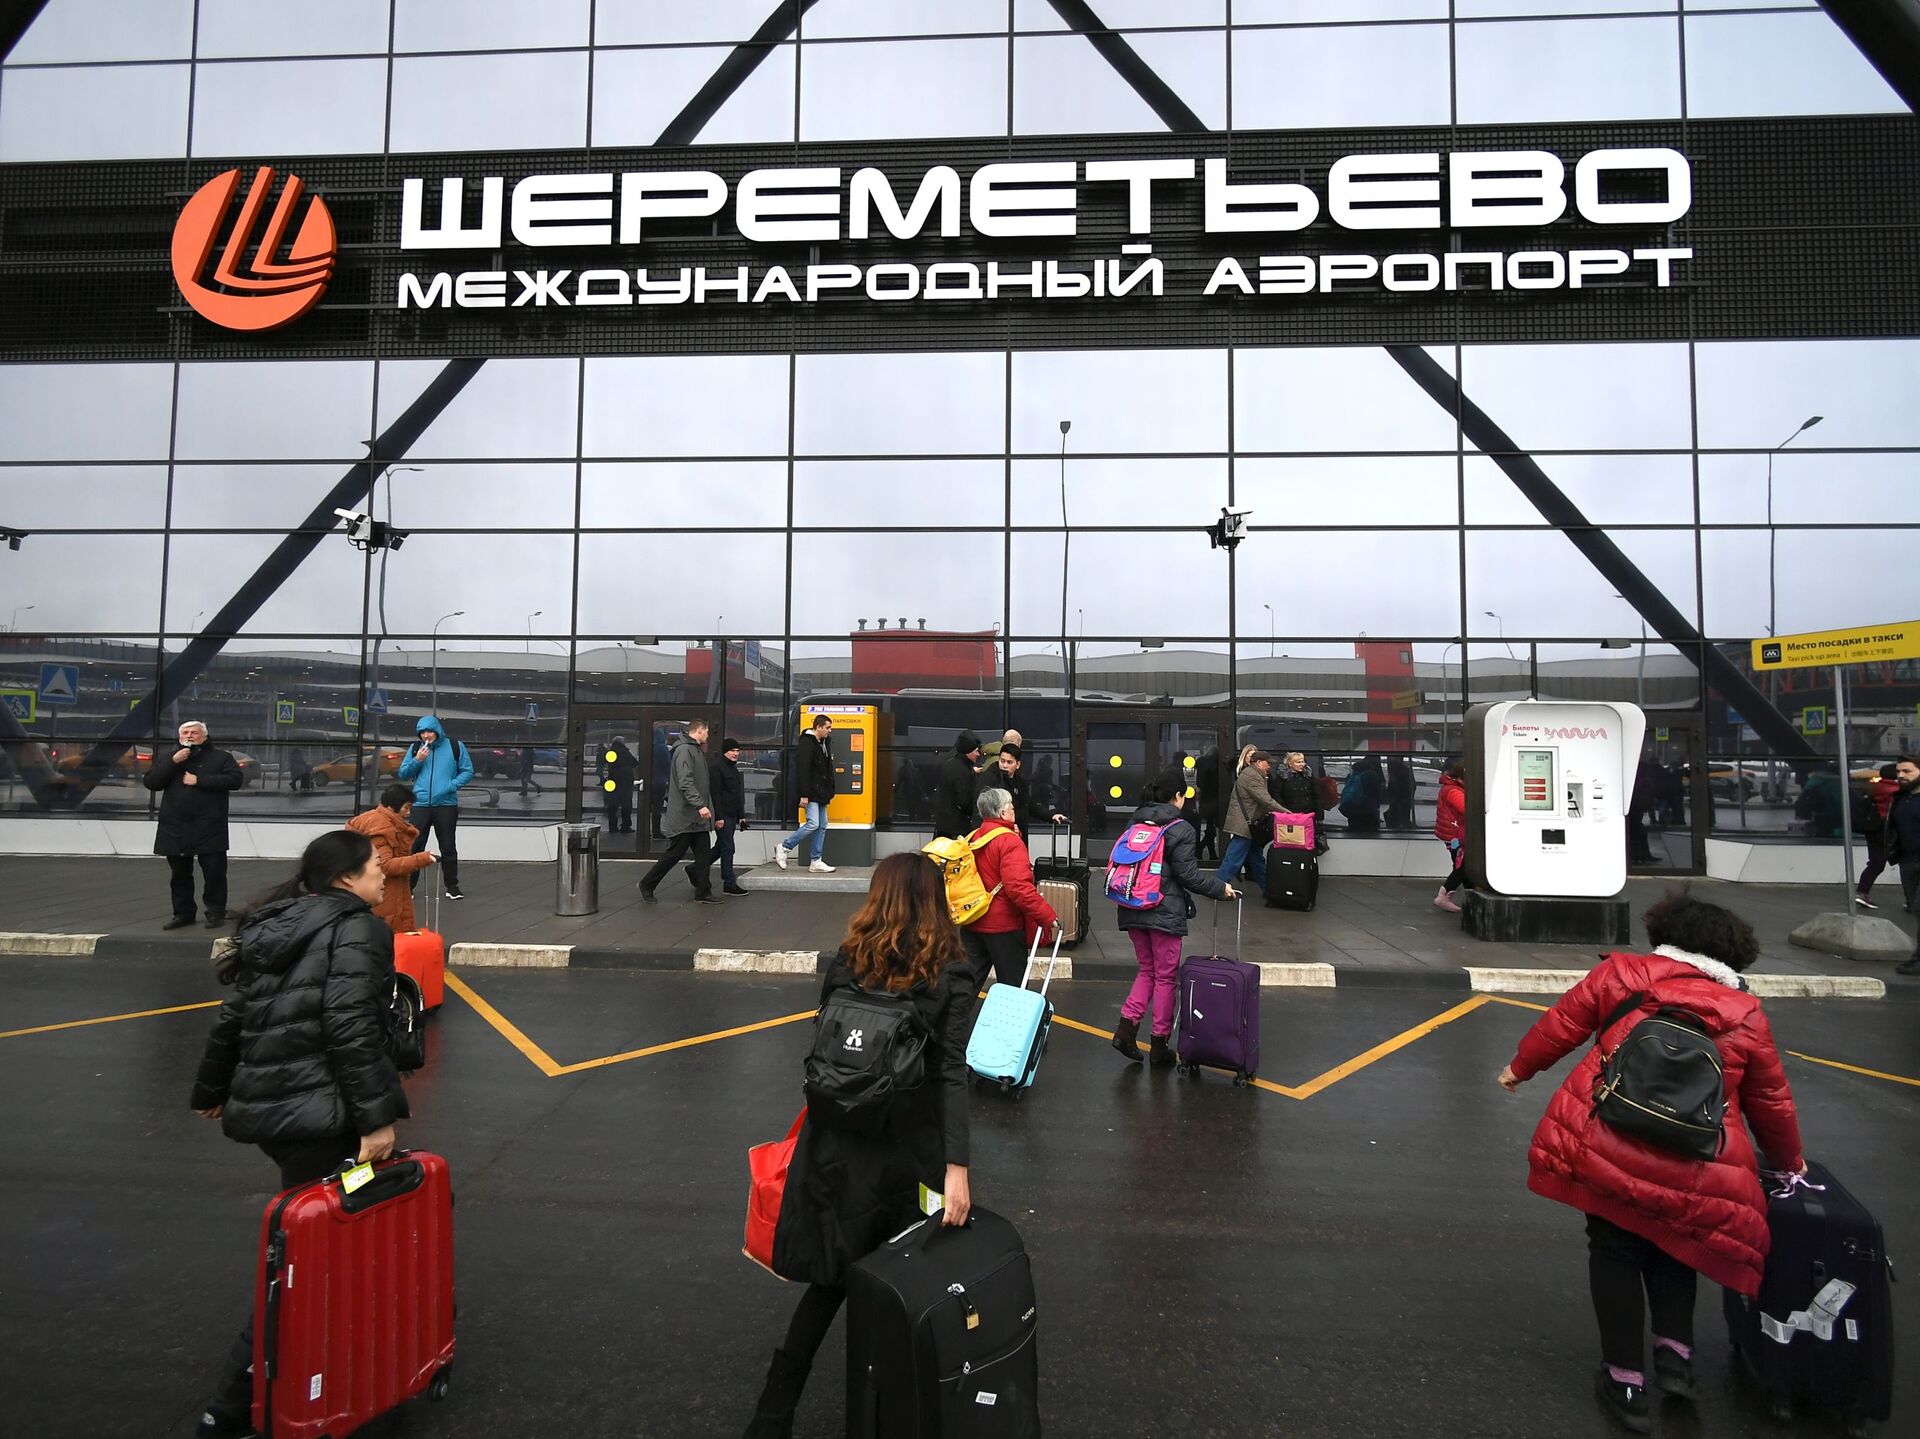 Международный терминал шереметьево. Аэропорт Москва Шереметьево. Шереметьево интернационал аэропорт. Фото аэропорта Шереметьево в Москве. Шереметьево лучший аэропорт мира.